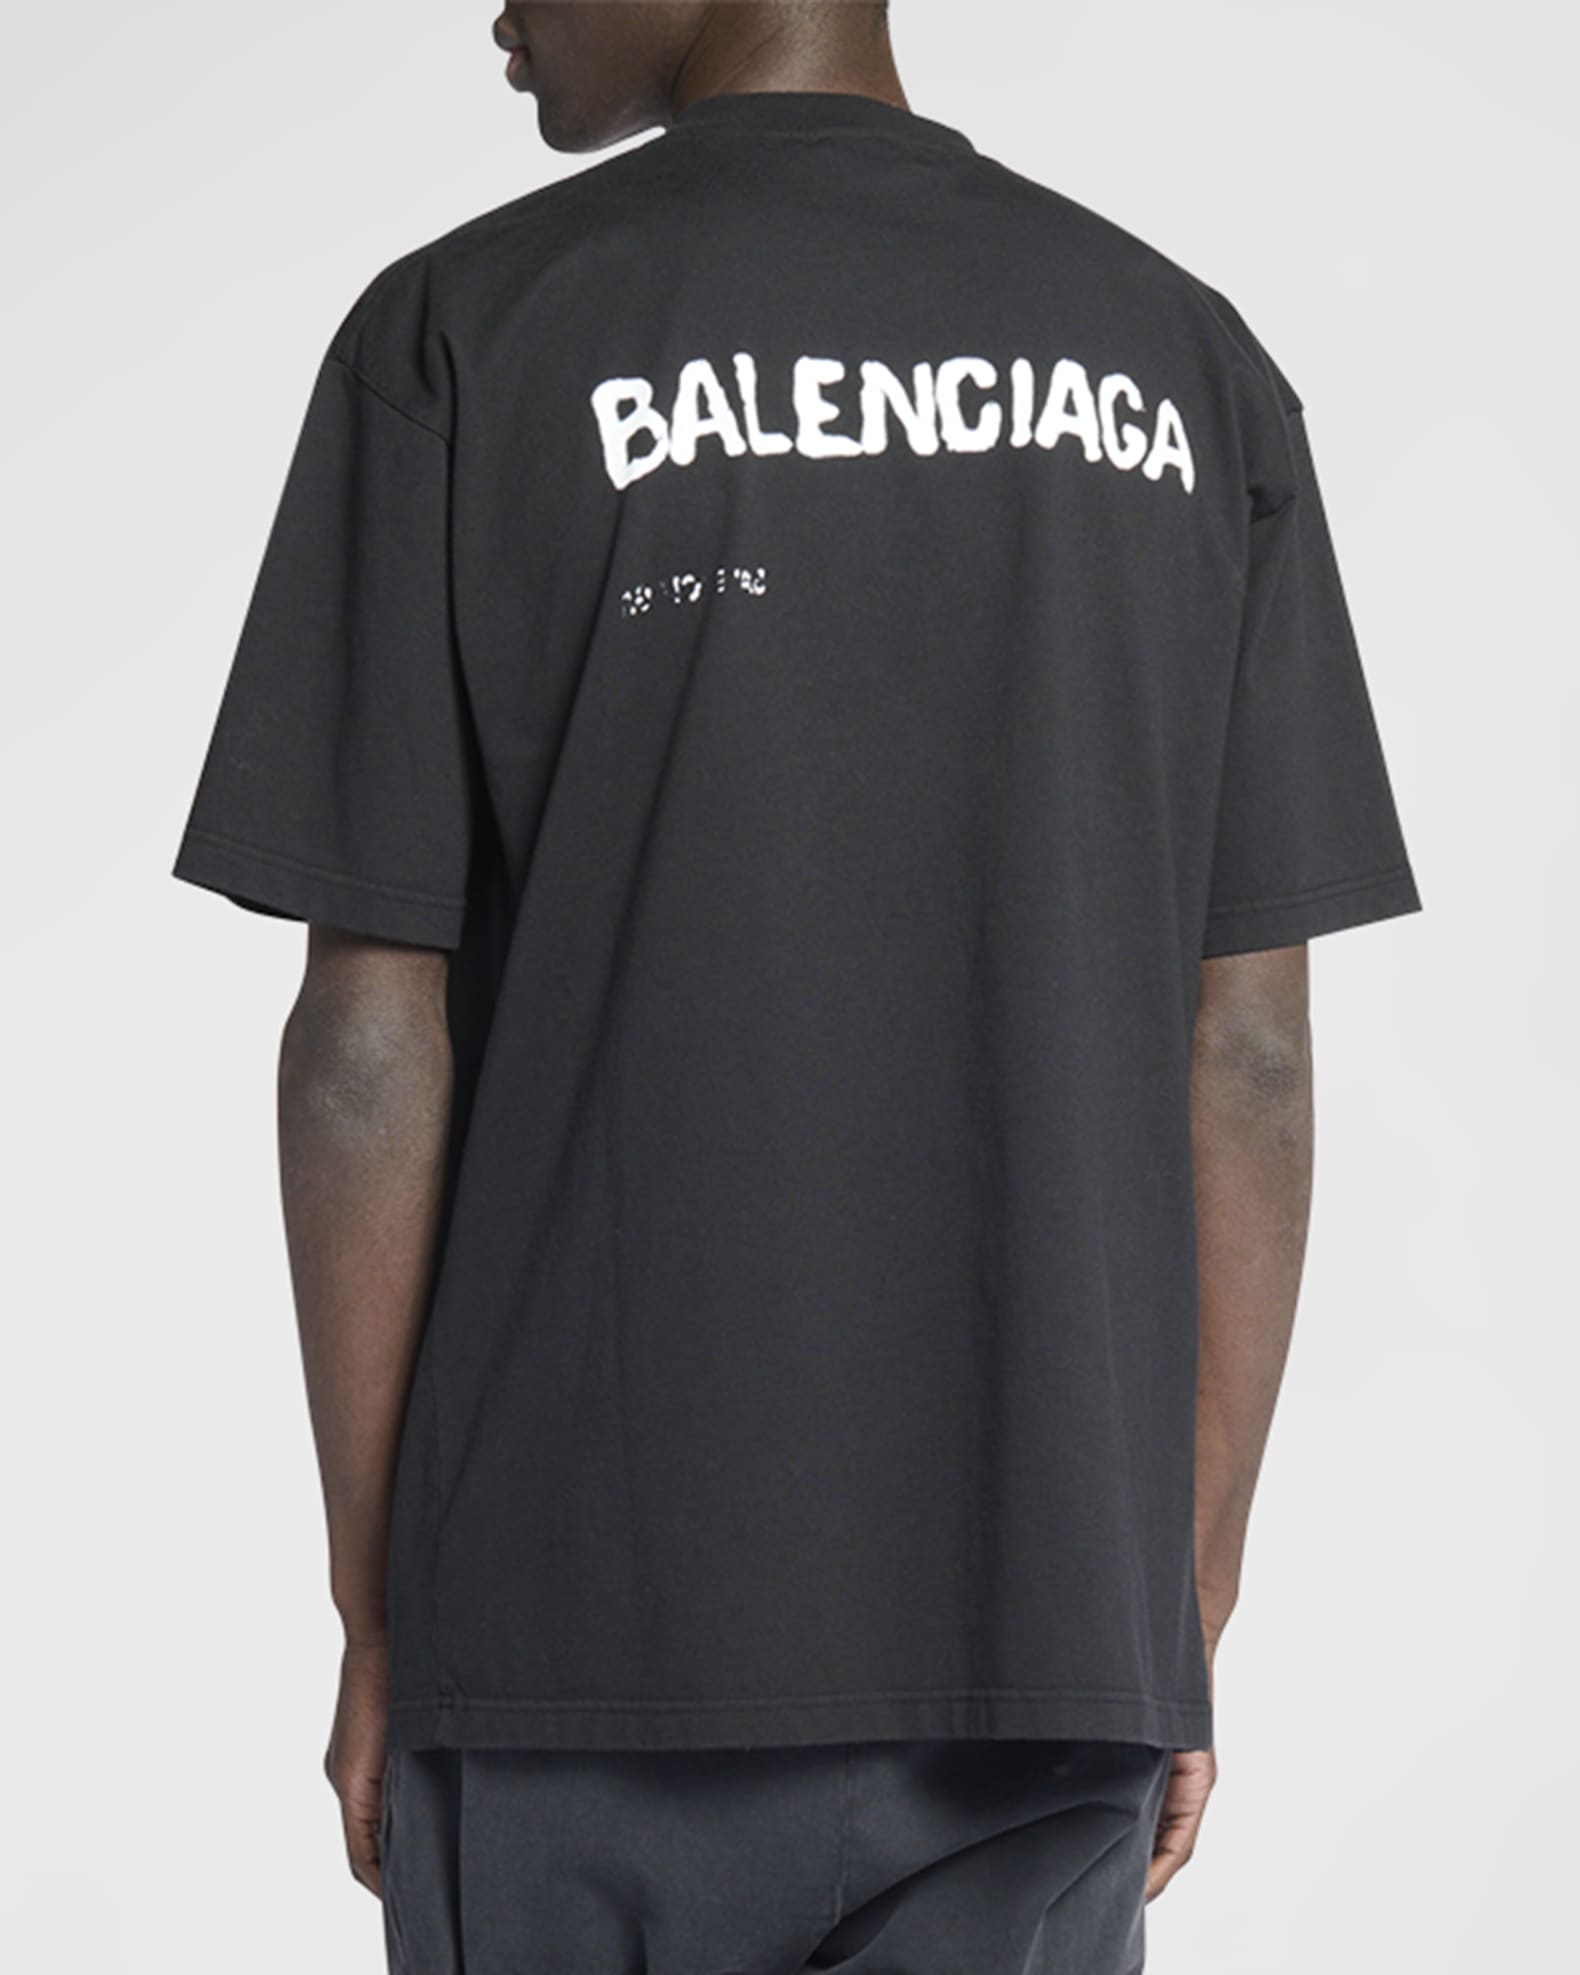 Balenciaga Large Fit T-Shirt Black